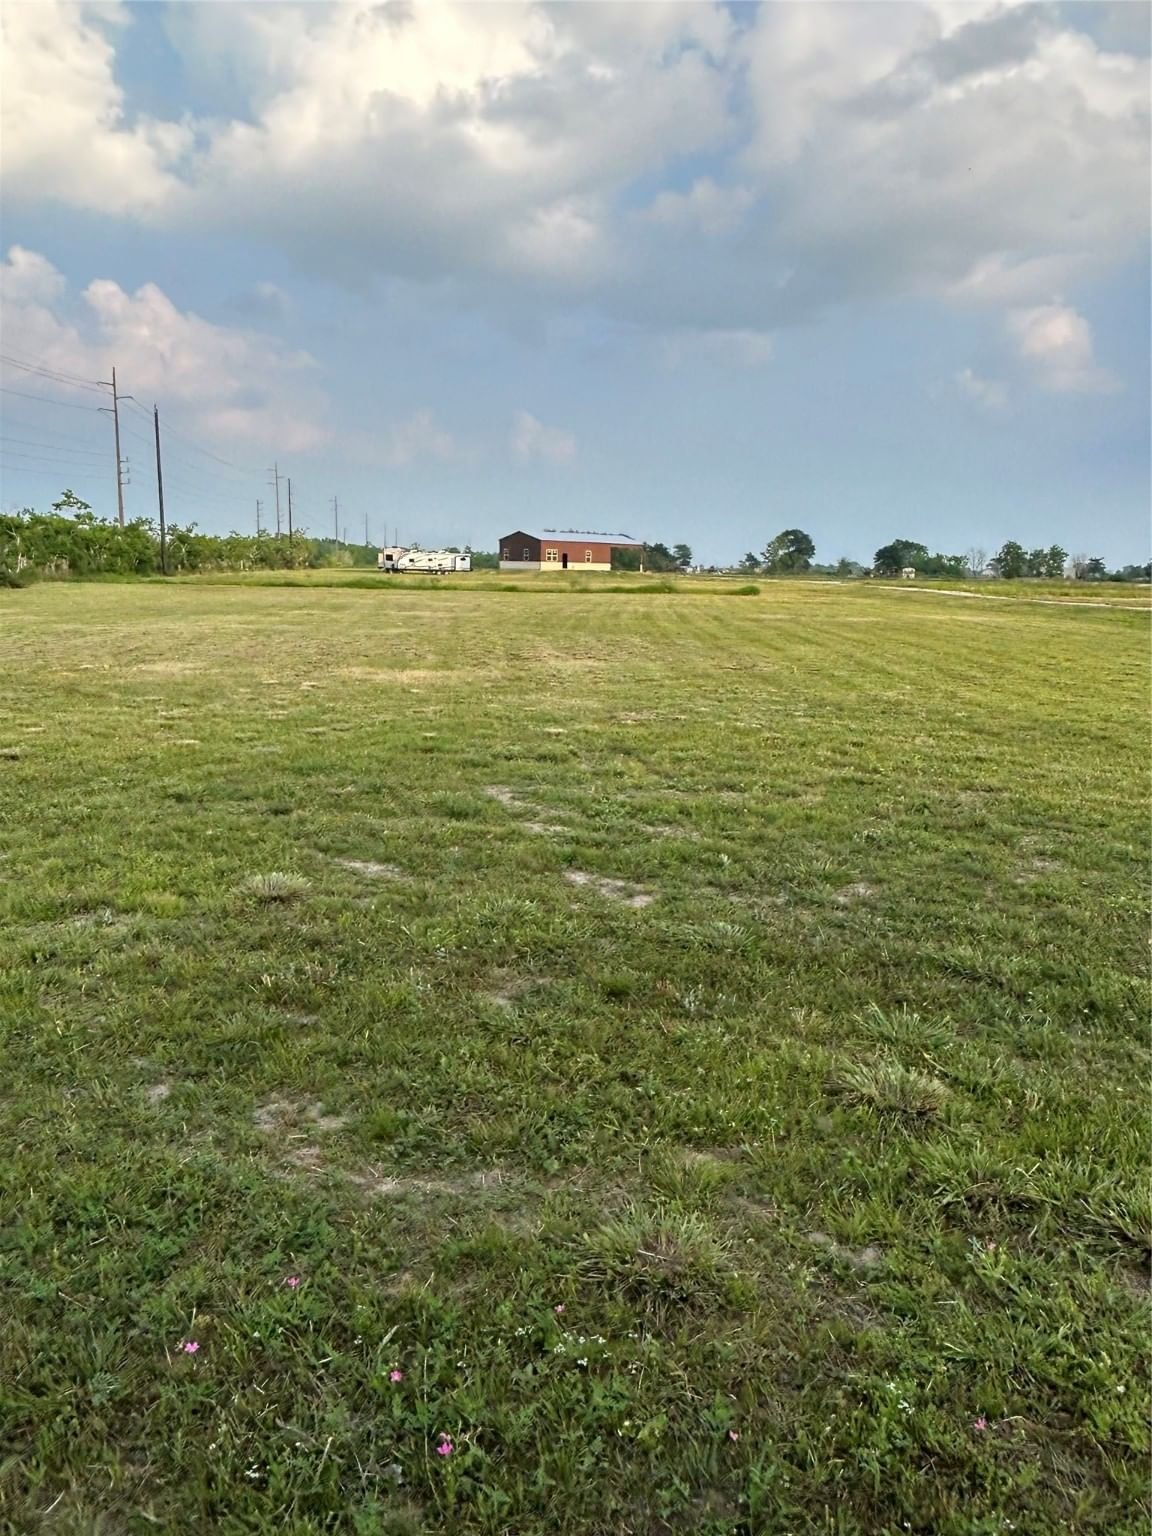 Real estate property located at 250 County Road 15, Brazoria, T L Smith Estate Lands Tr, Damon, TX, US